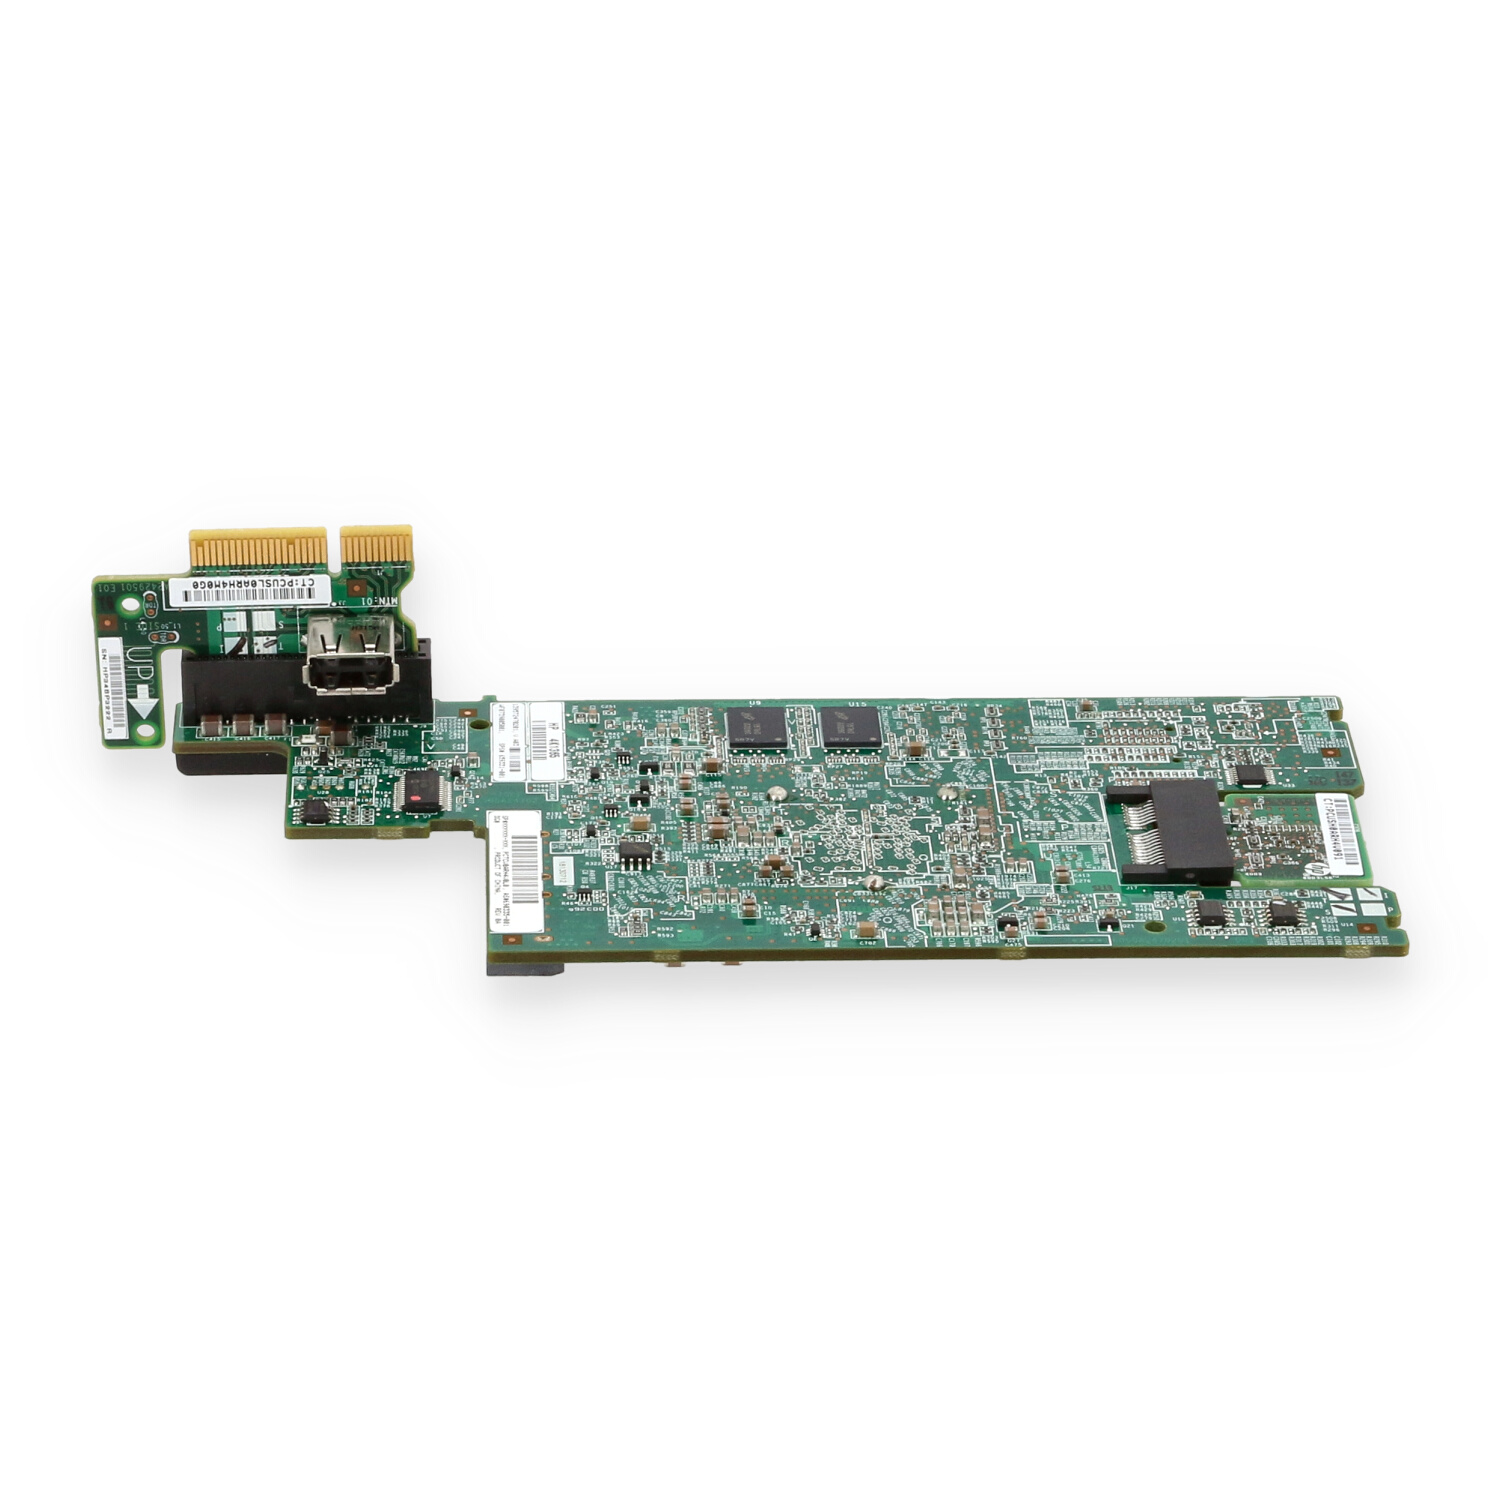 HPE Smart Array P220i 512MB 6G SAS RAID Controller 677898-B21 659331-001 690335-001